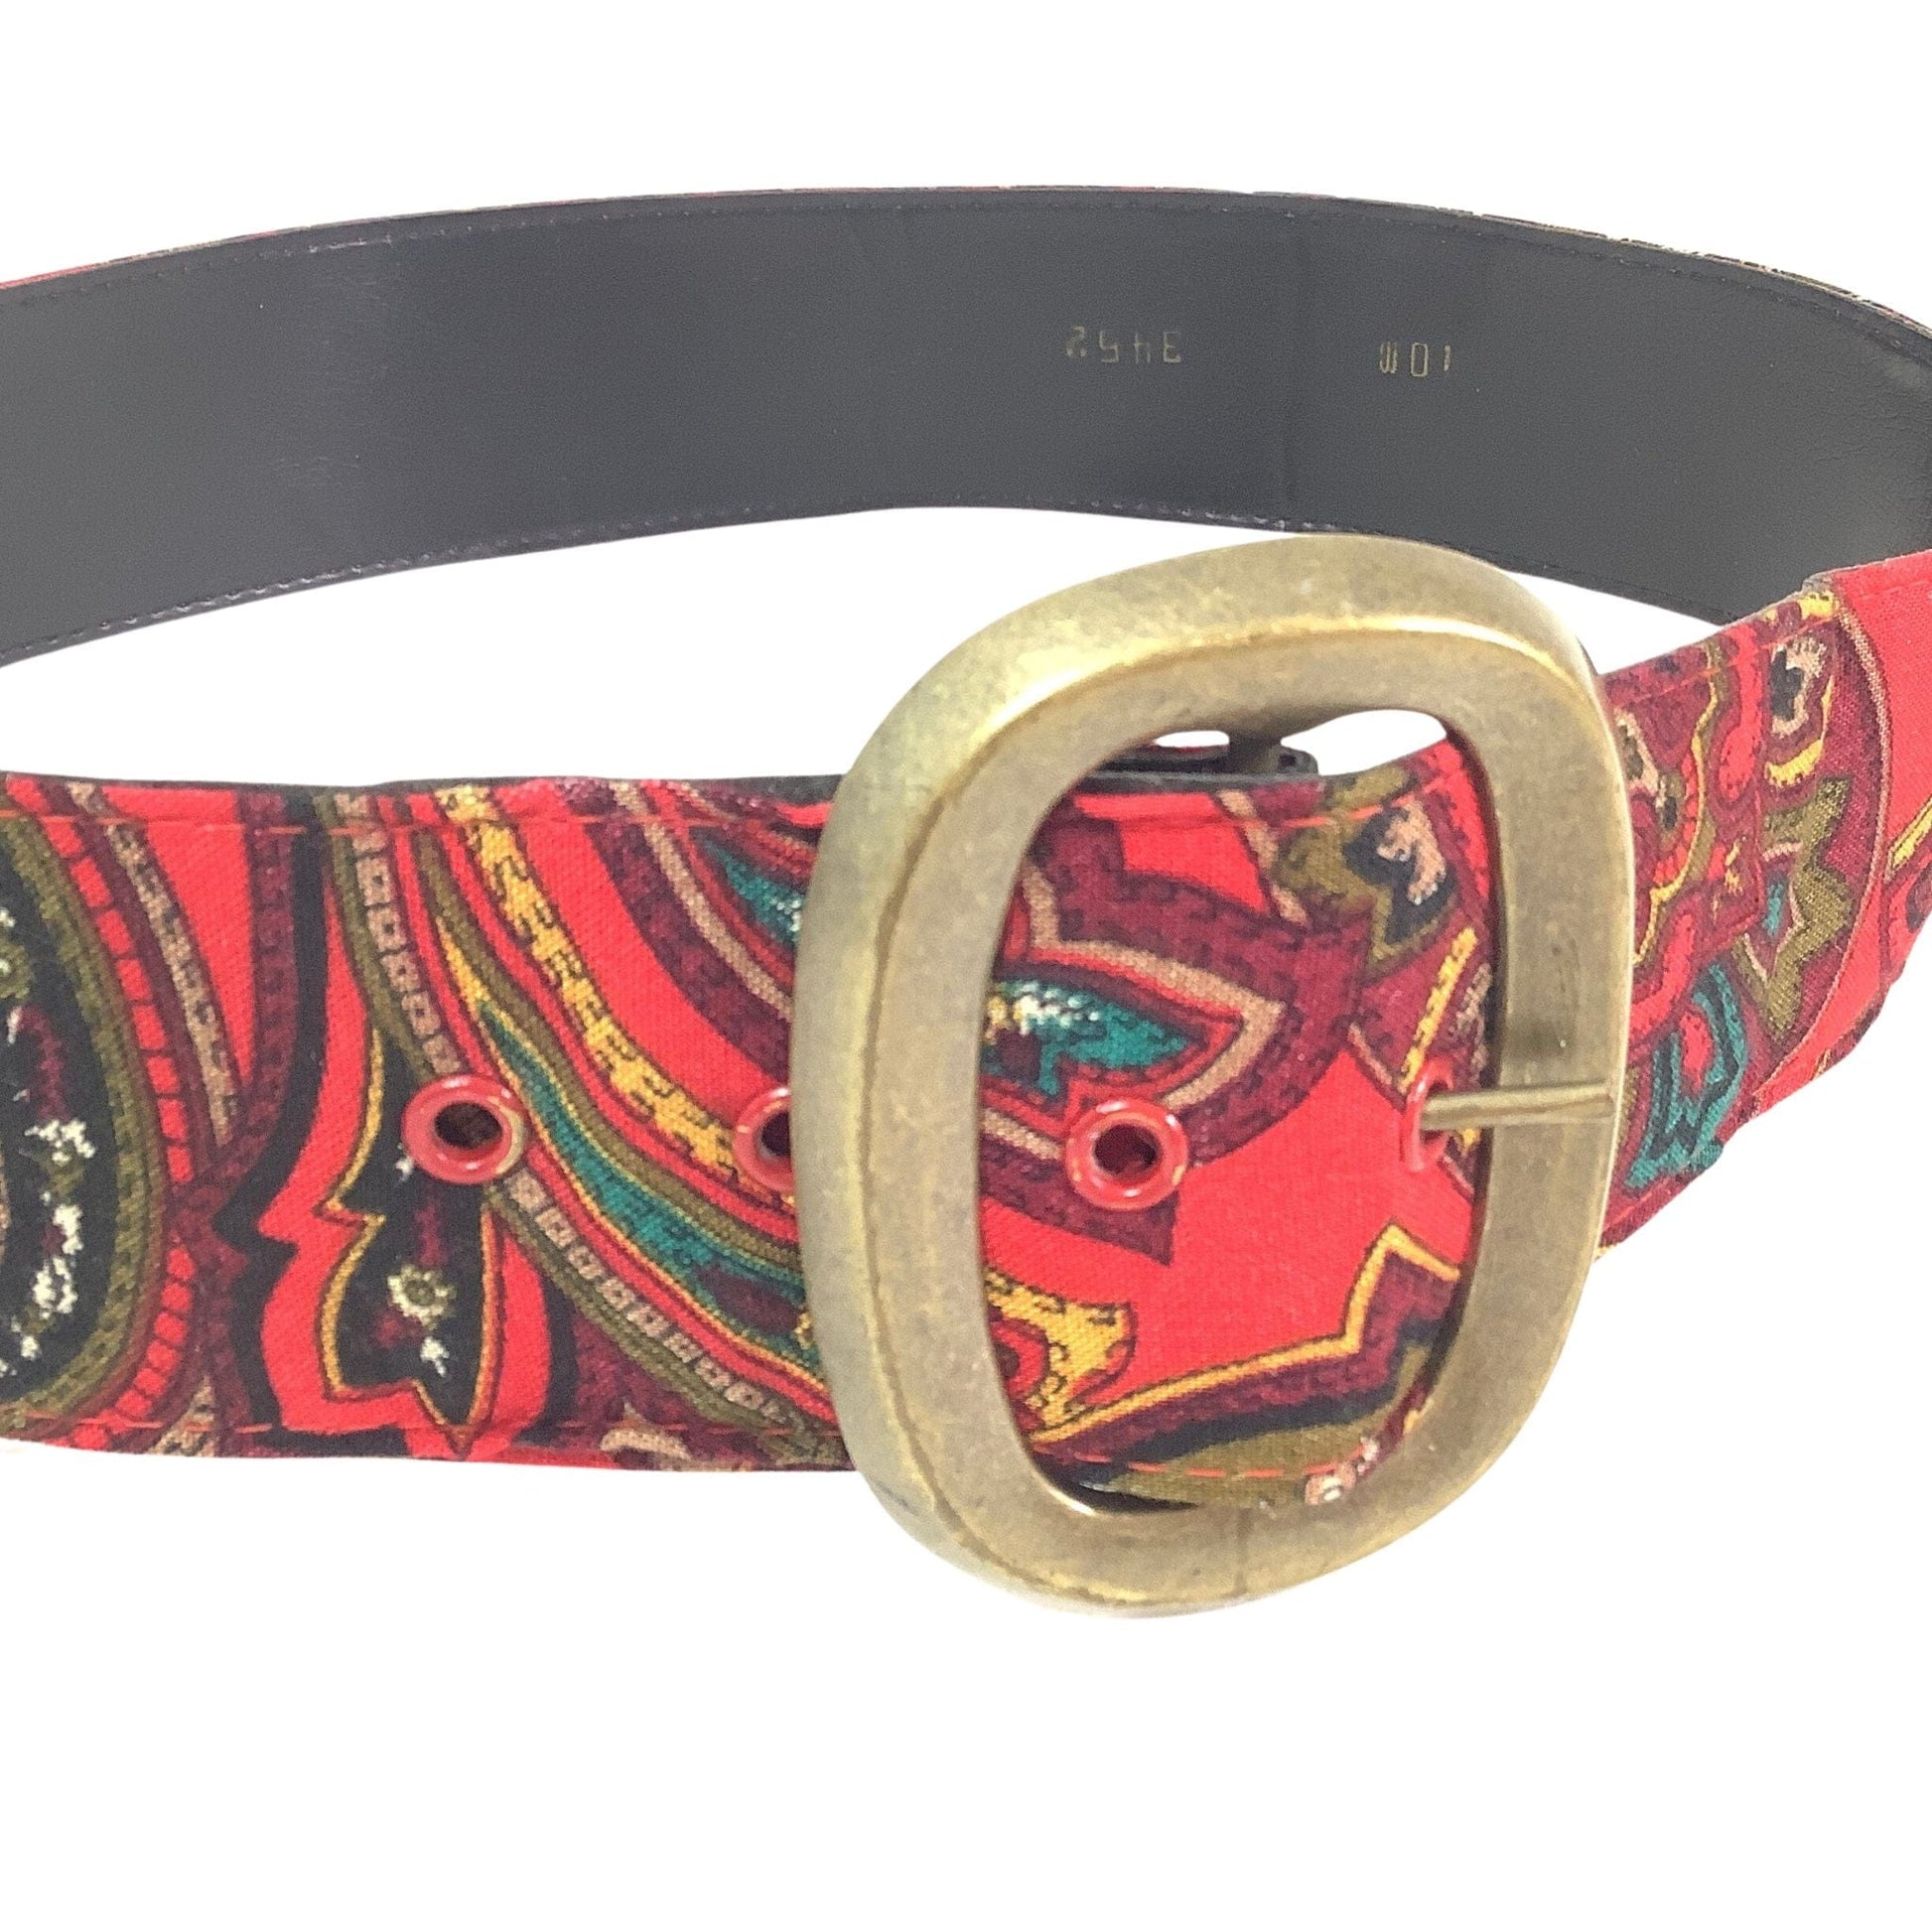 1970s Boho Fabric Belt Medium / Red / Vintage 1970s